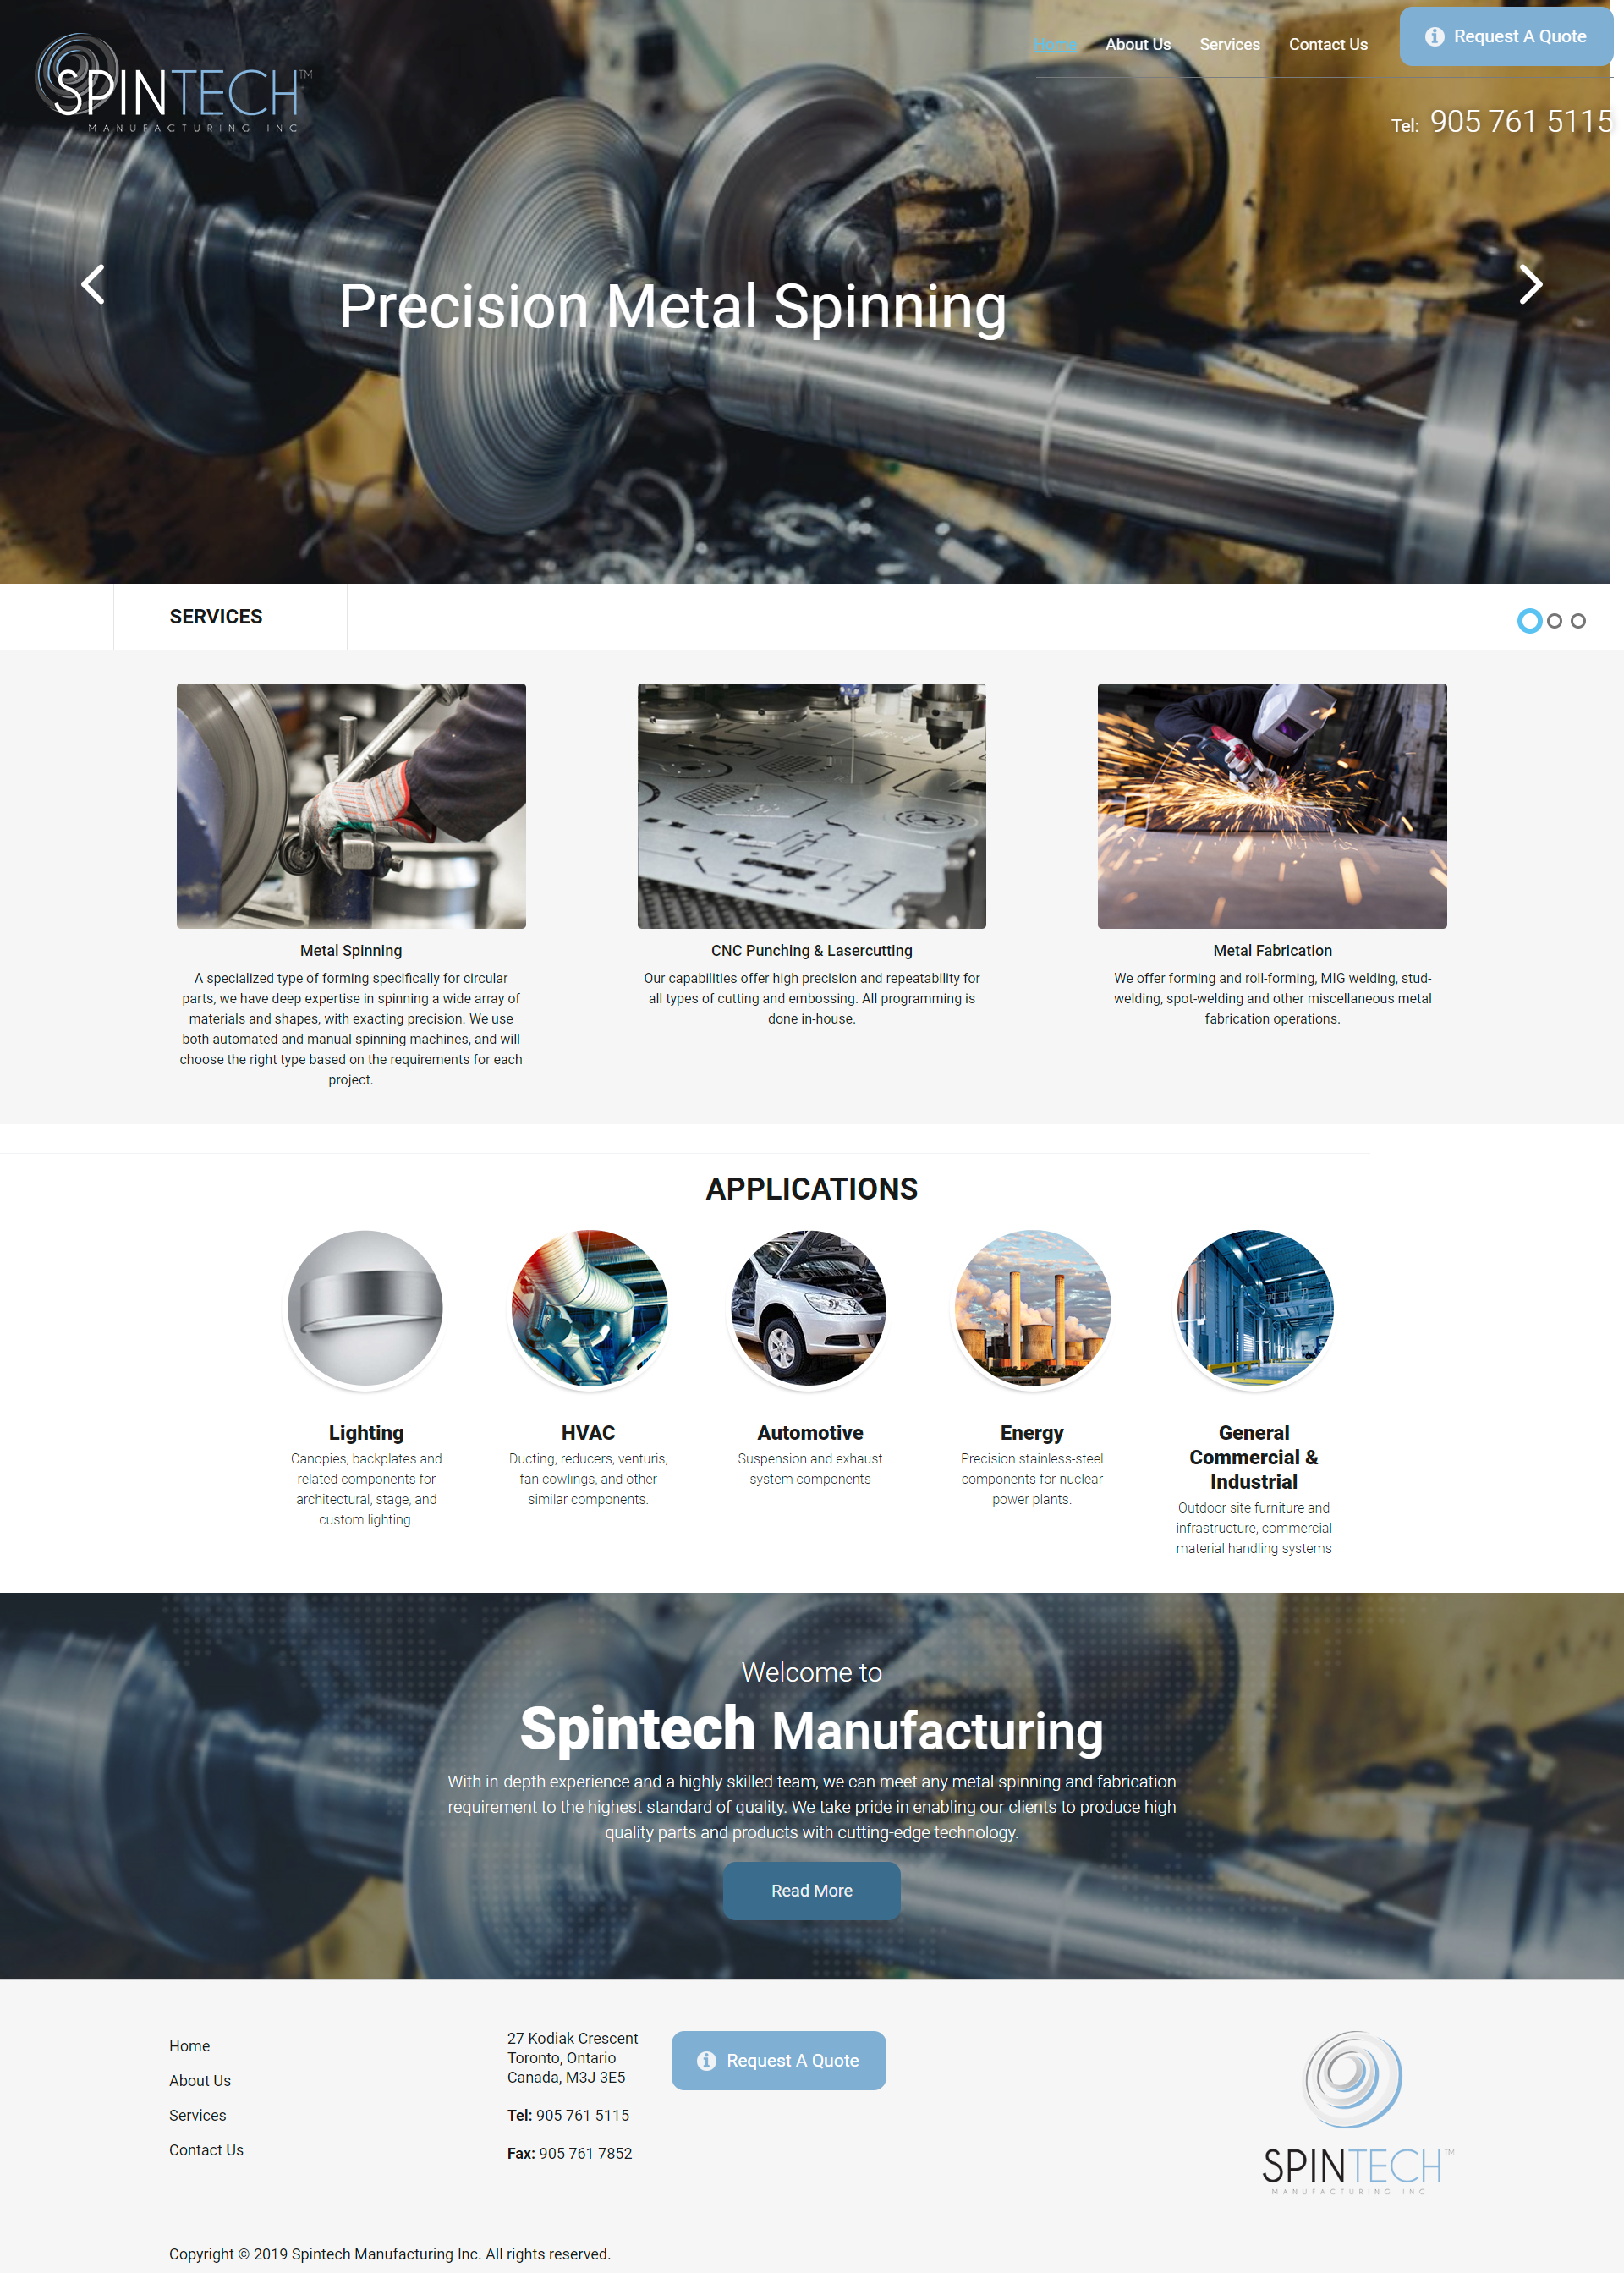 Spintech Manufacturing